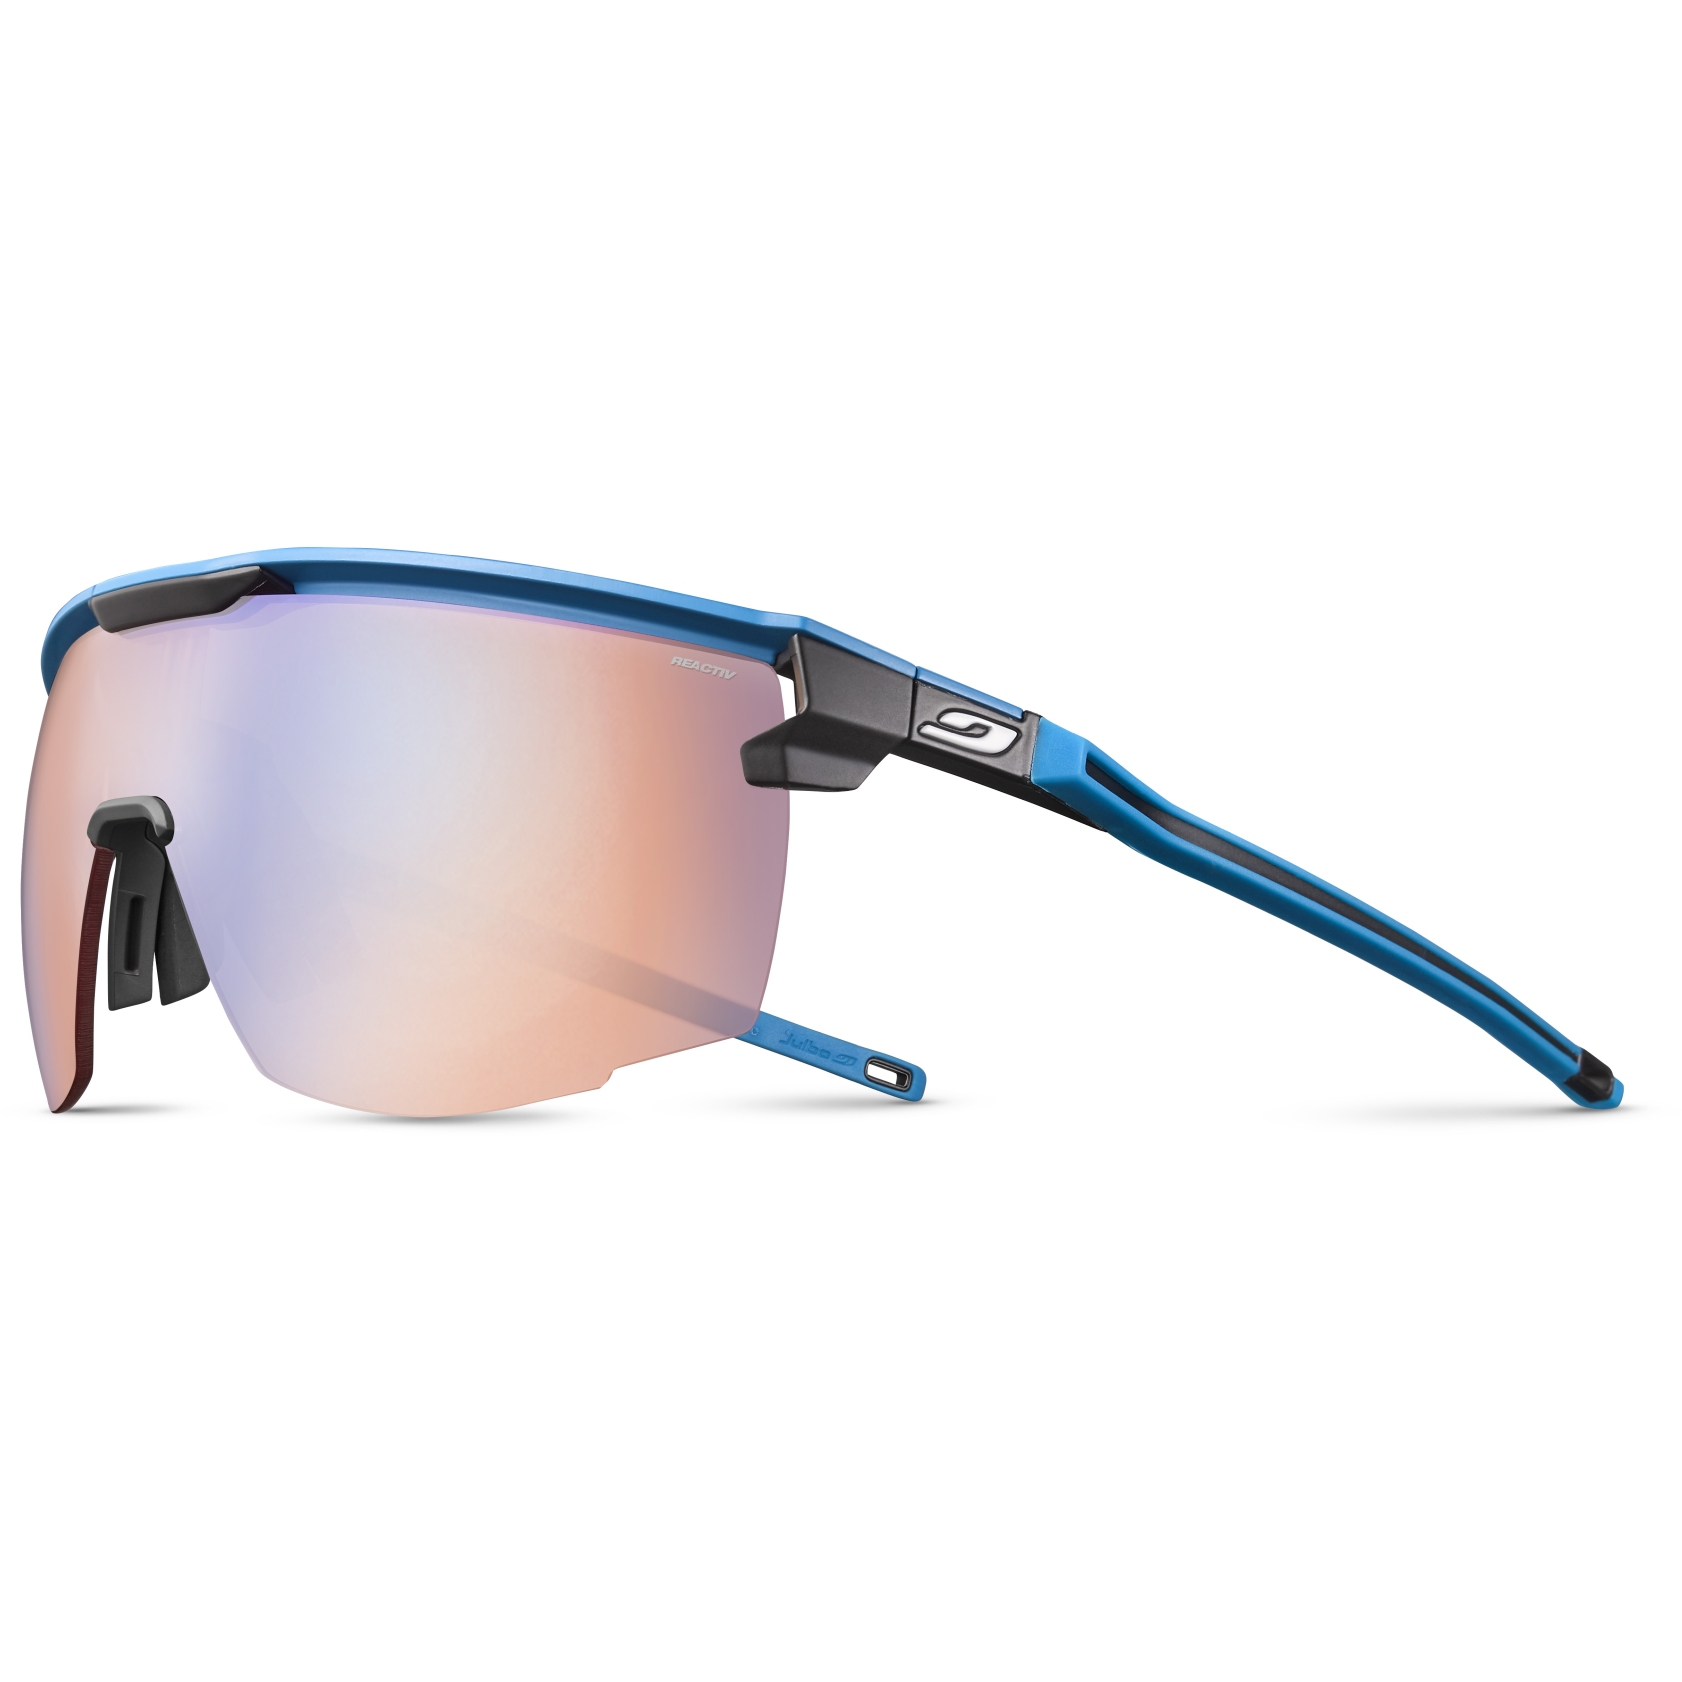 Productfoto van Julbo Ultimate Reactiv Performance 1-3 HC Sunglasses - matt blue/black